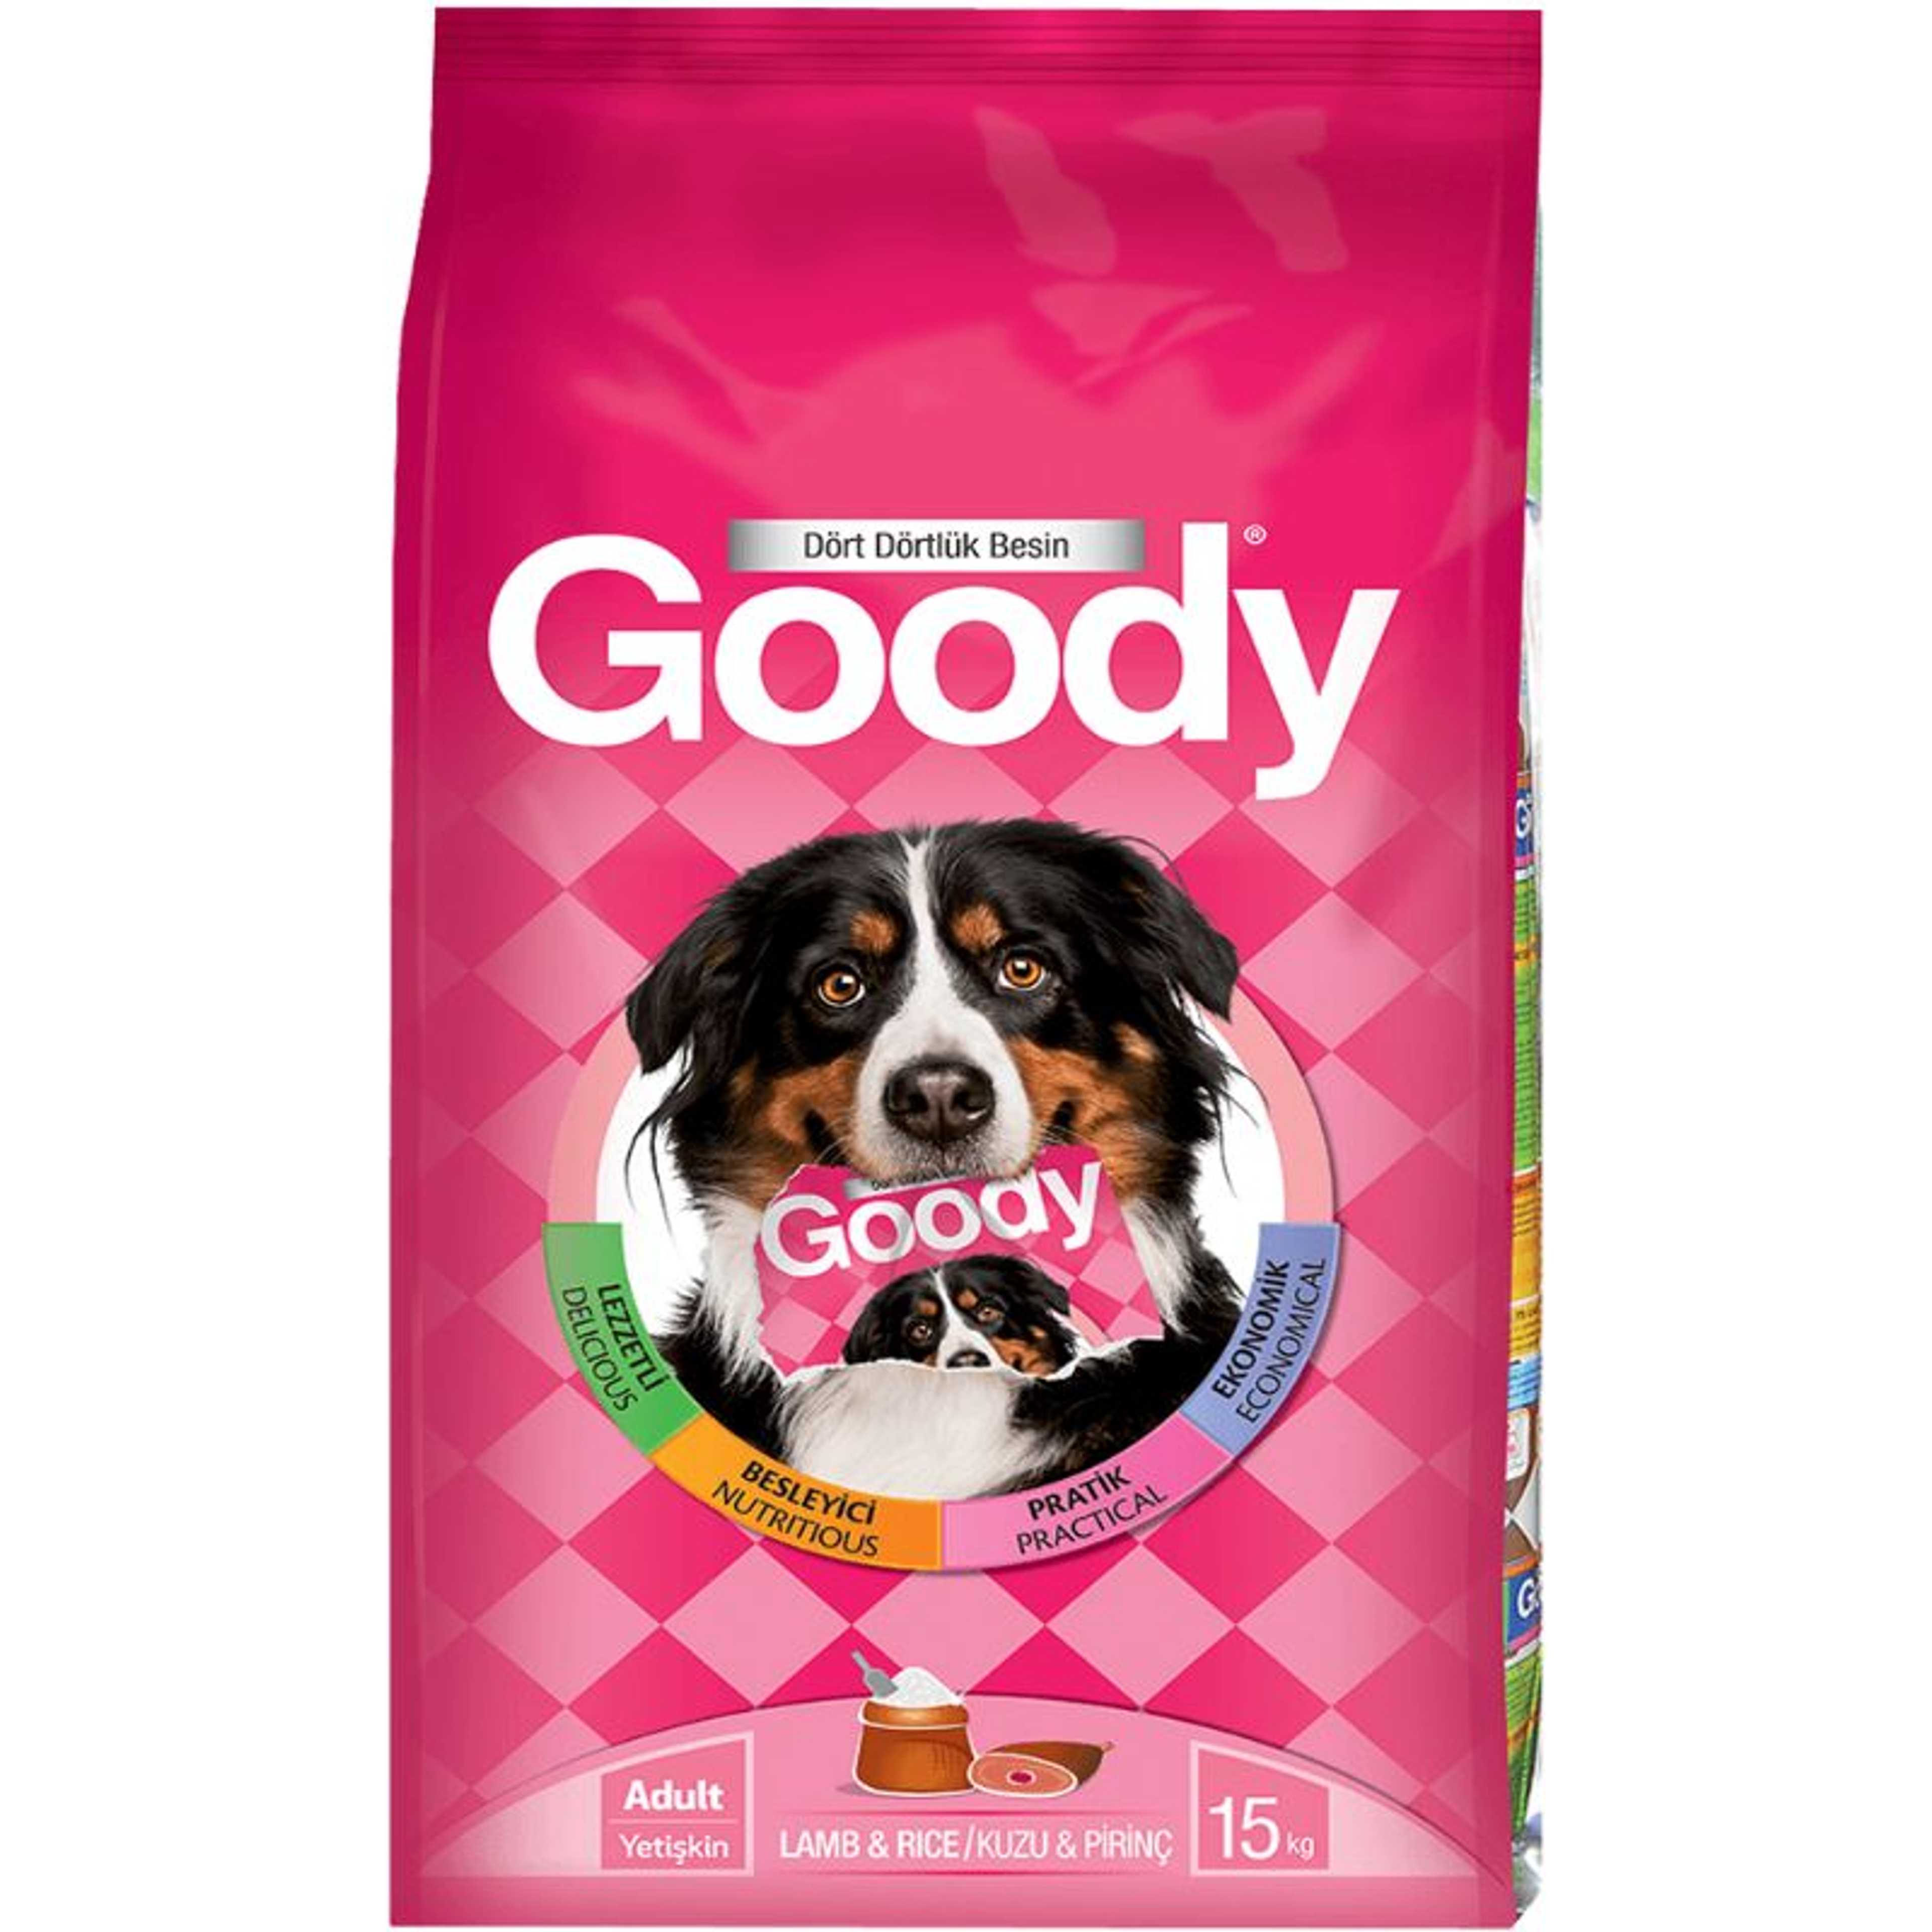 Goody lamb & Rice Adult Dog Food 2.5kg